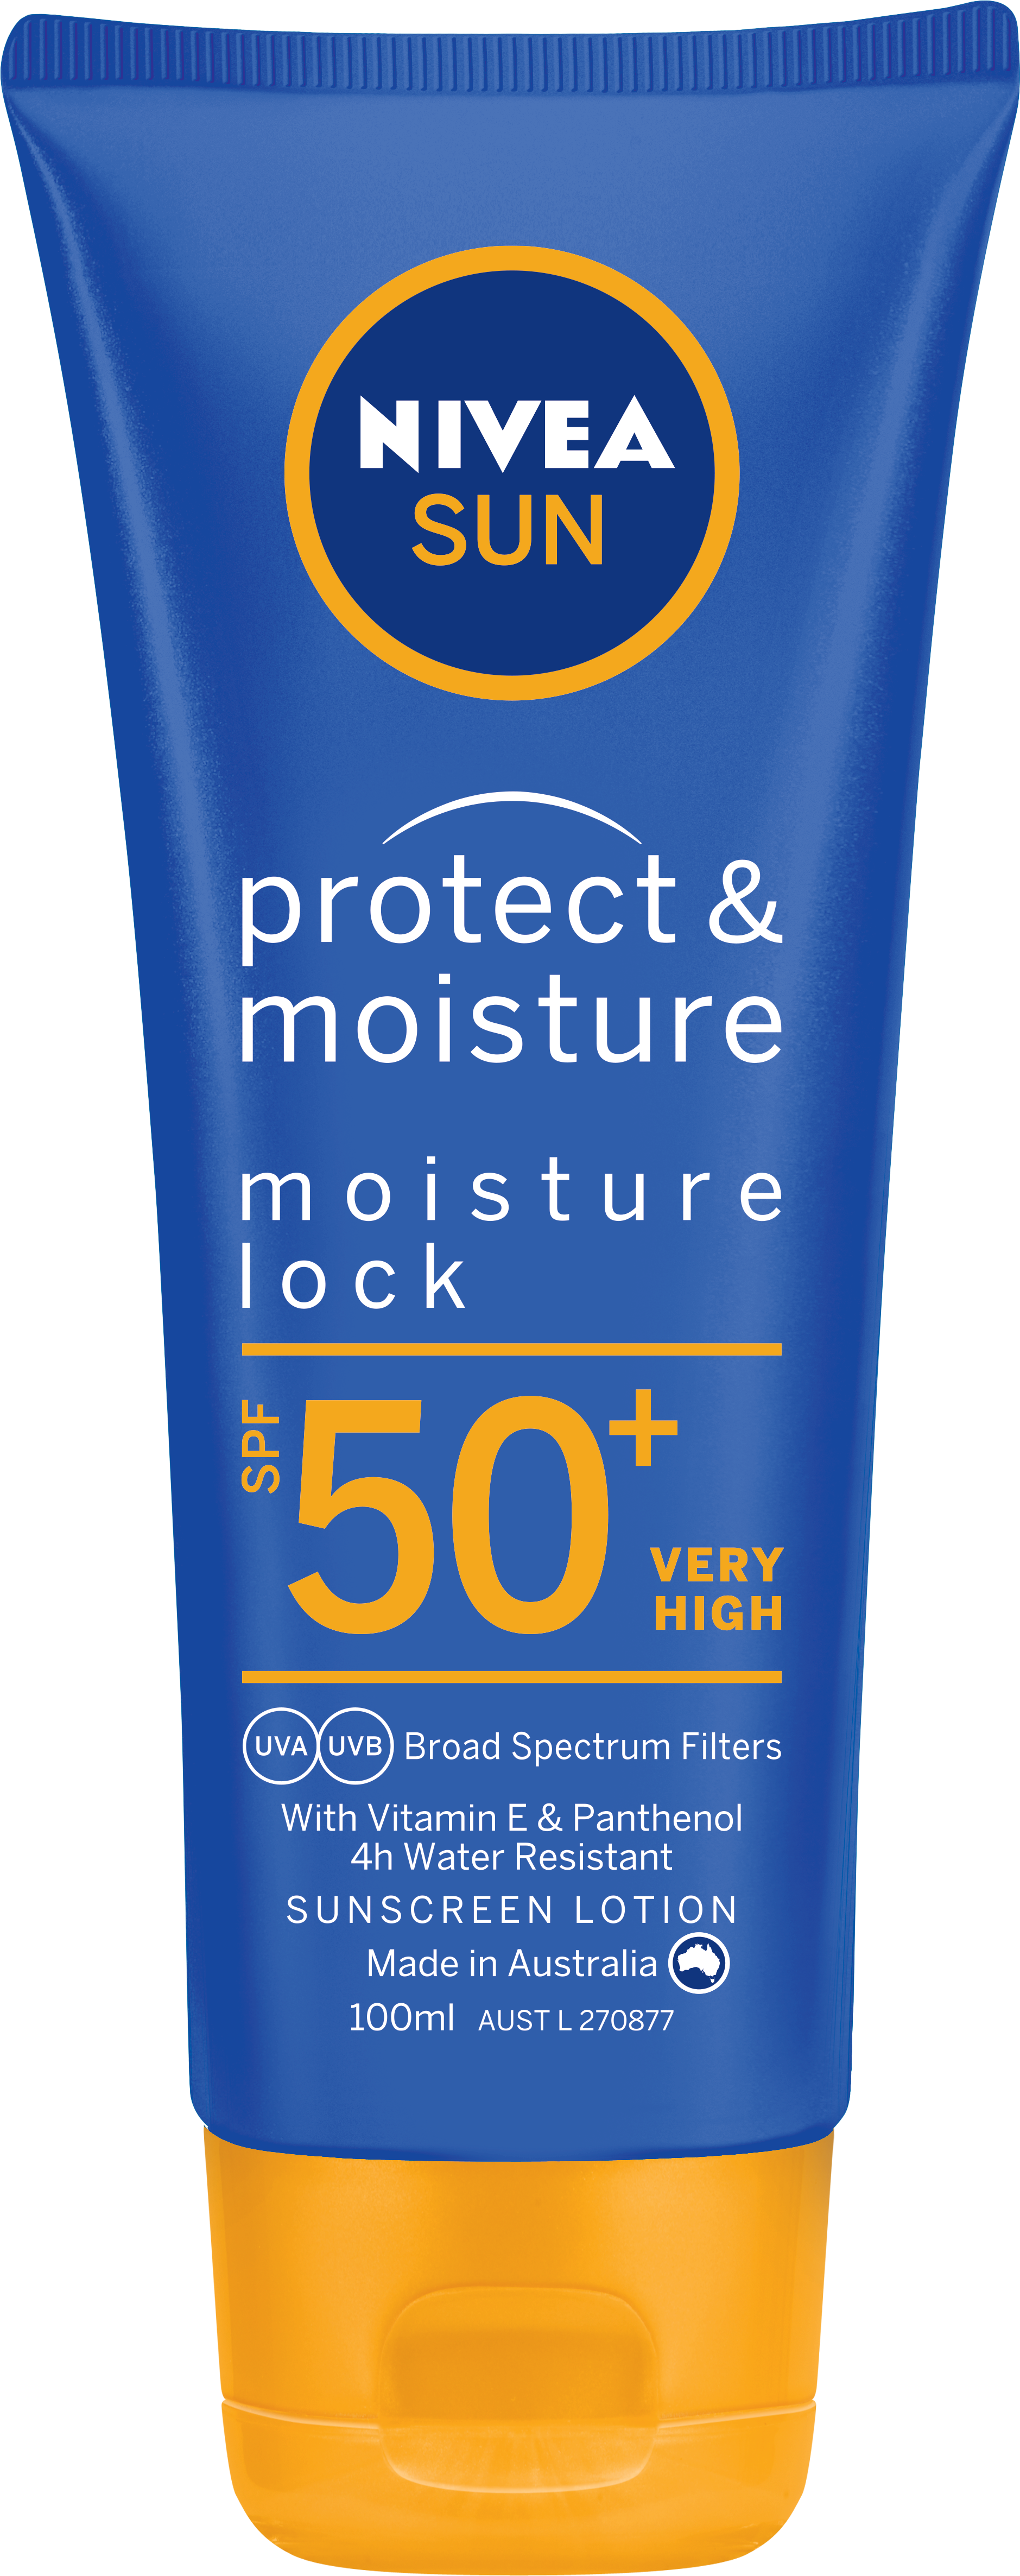 Nivea Sun Protect & Moisture Moisturising Sunscreen Lotion SPF 50+